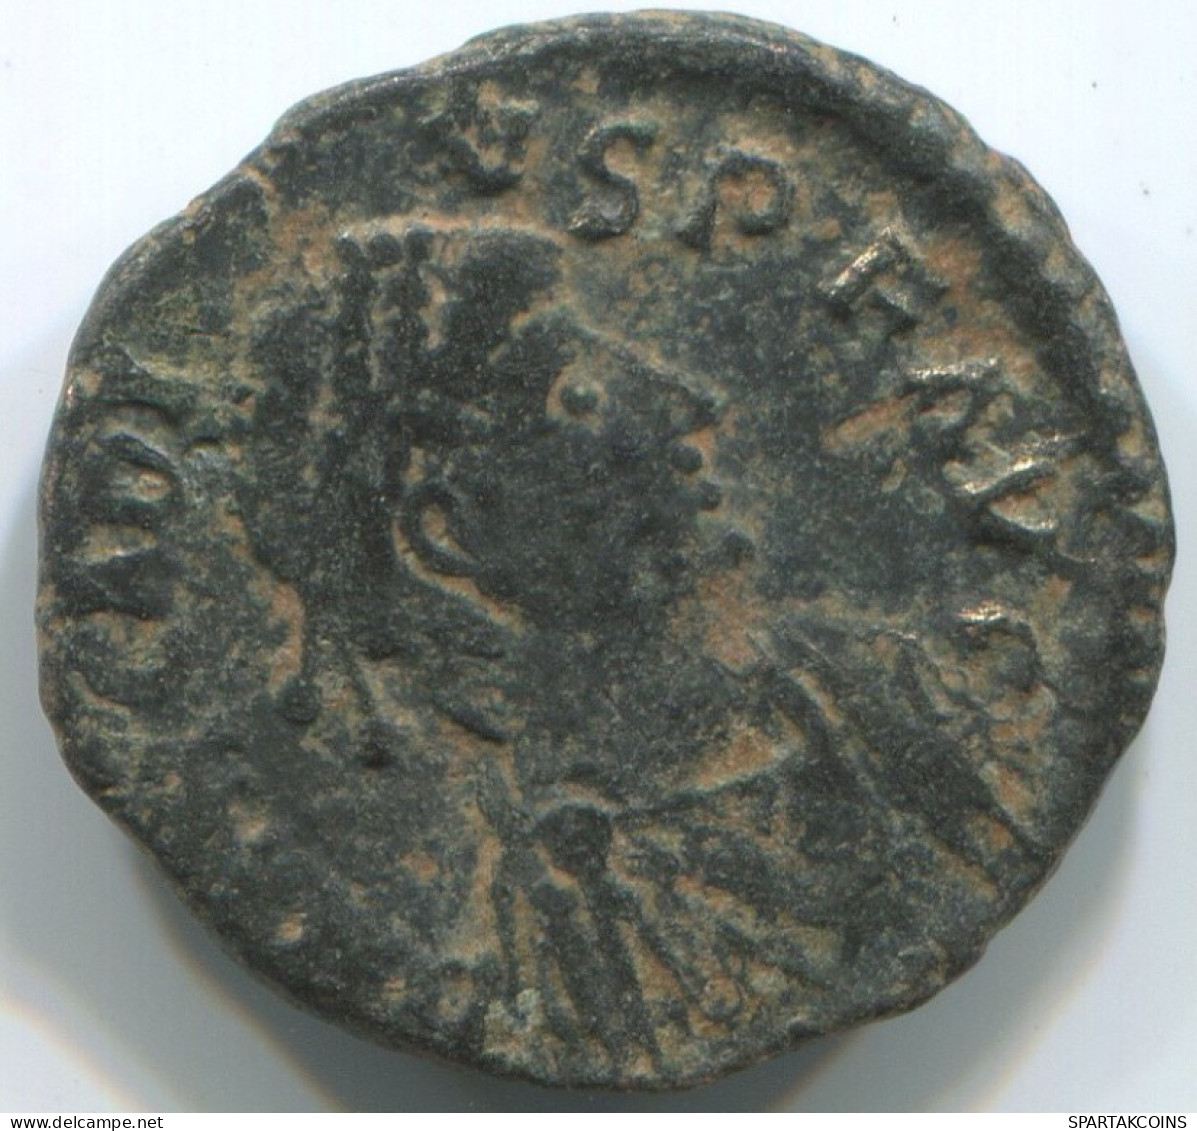 LATE ROMAN EMPIRE Pièce Antique Authentique Roman Pièce 2.1g/16mm #ANT2416.14.F.A - Der Spätrömanischen Reich (363 / 476)